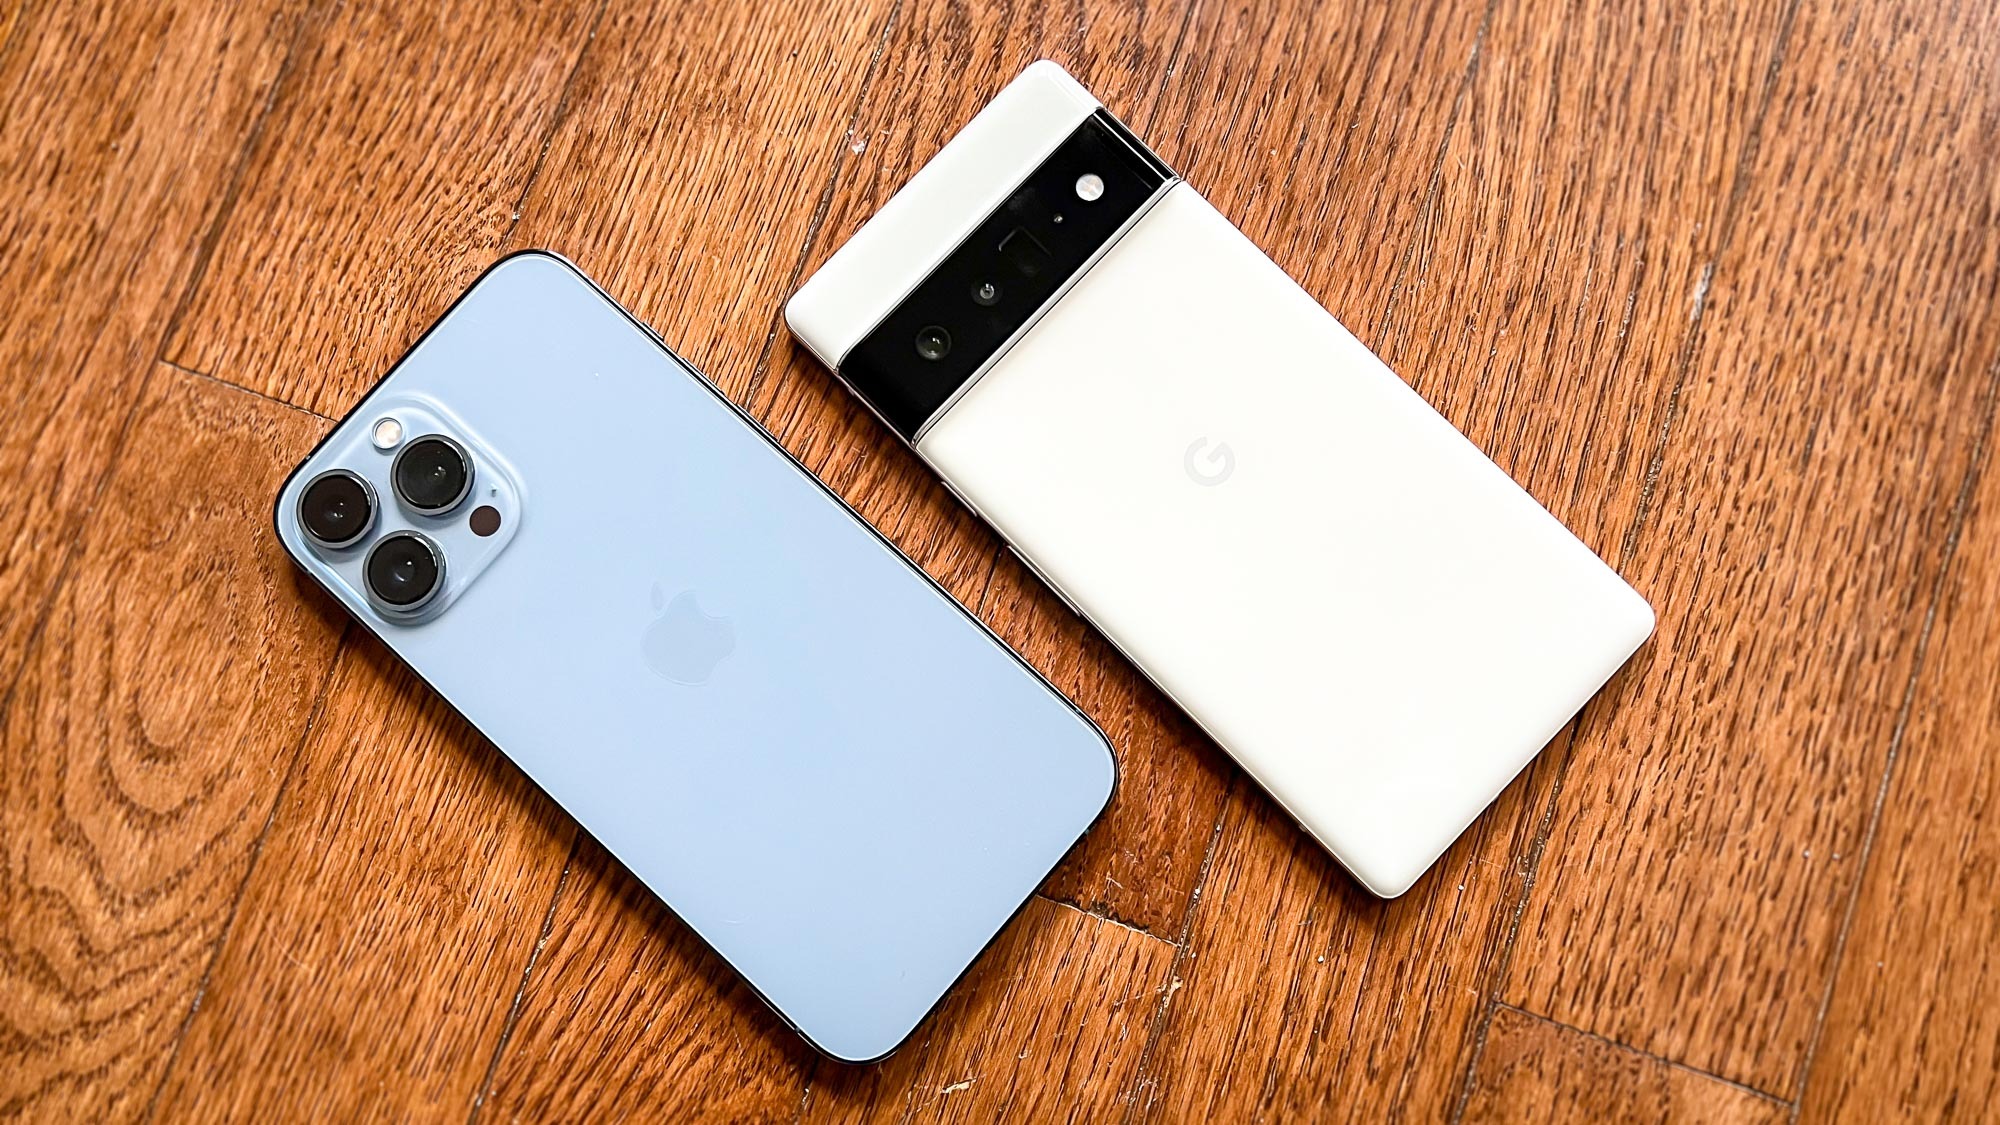 pixel 6 pro vs iphone 13 pro max: kedua ponsel tertelungkup di lantai kayu keras